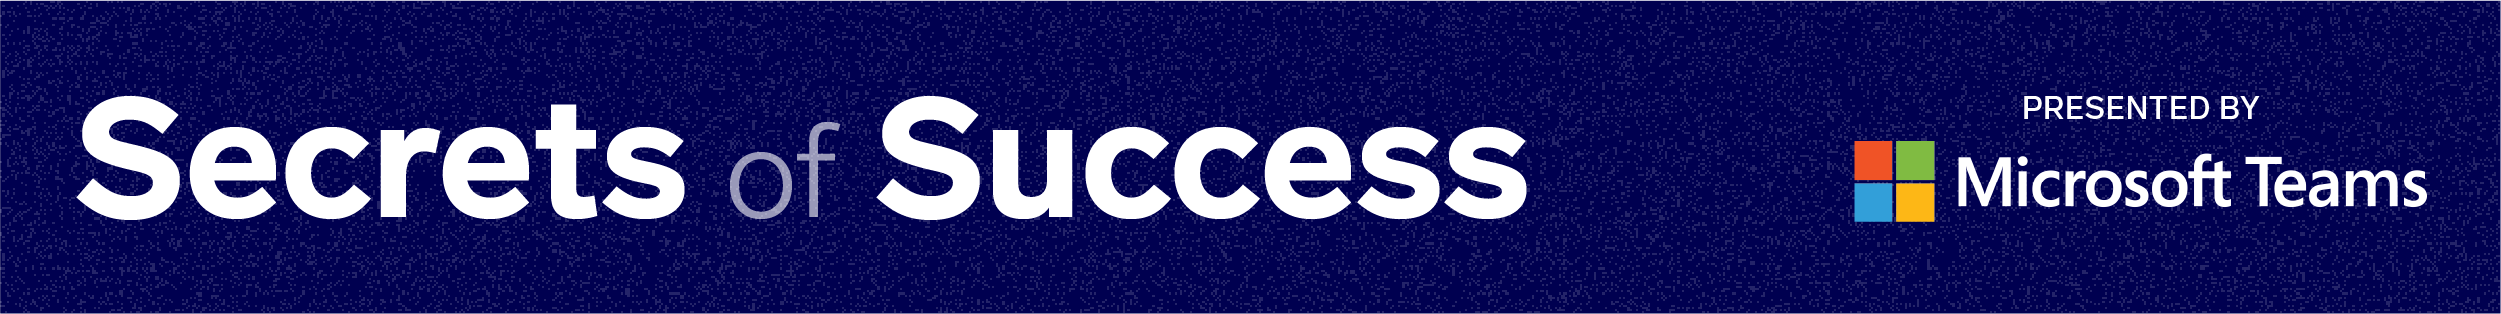 Secrets of Success banner